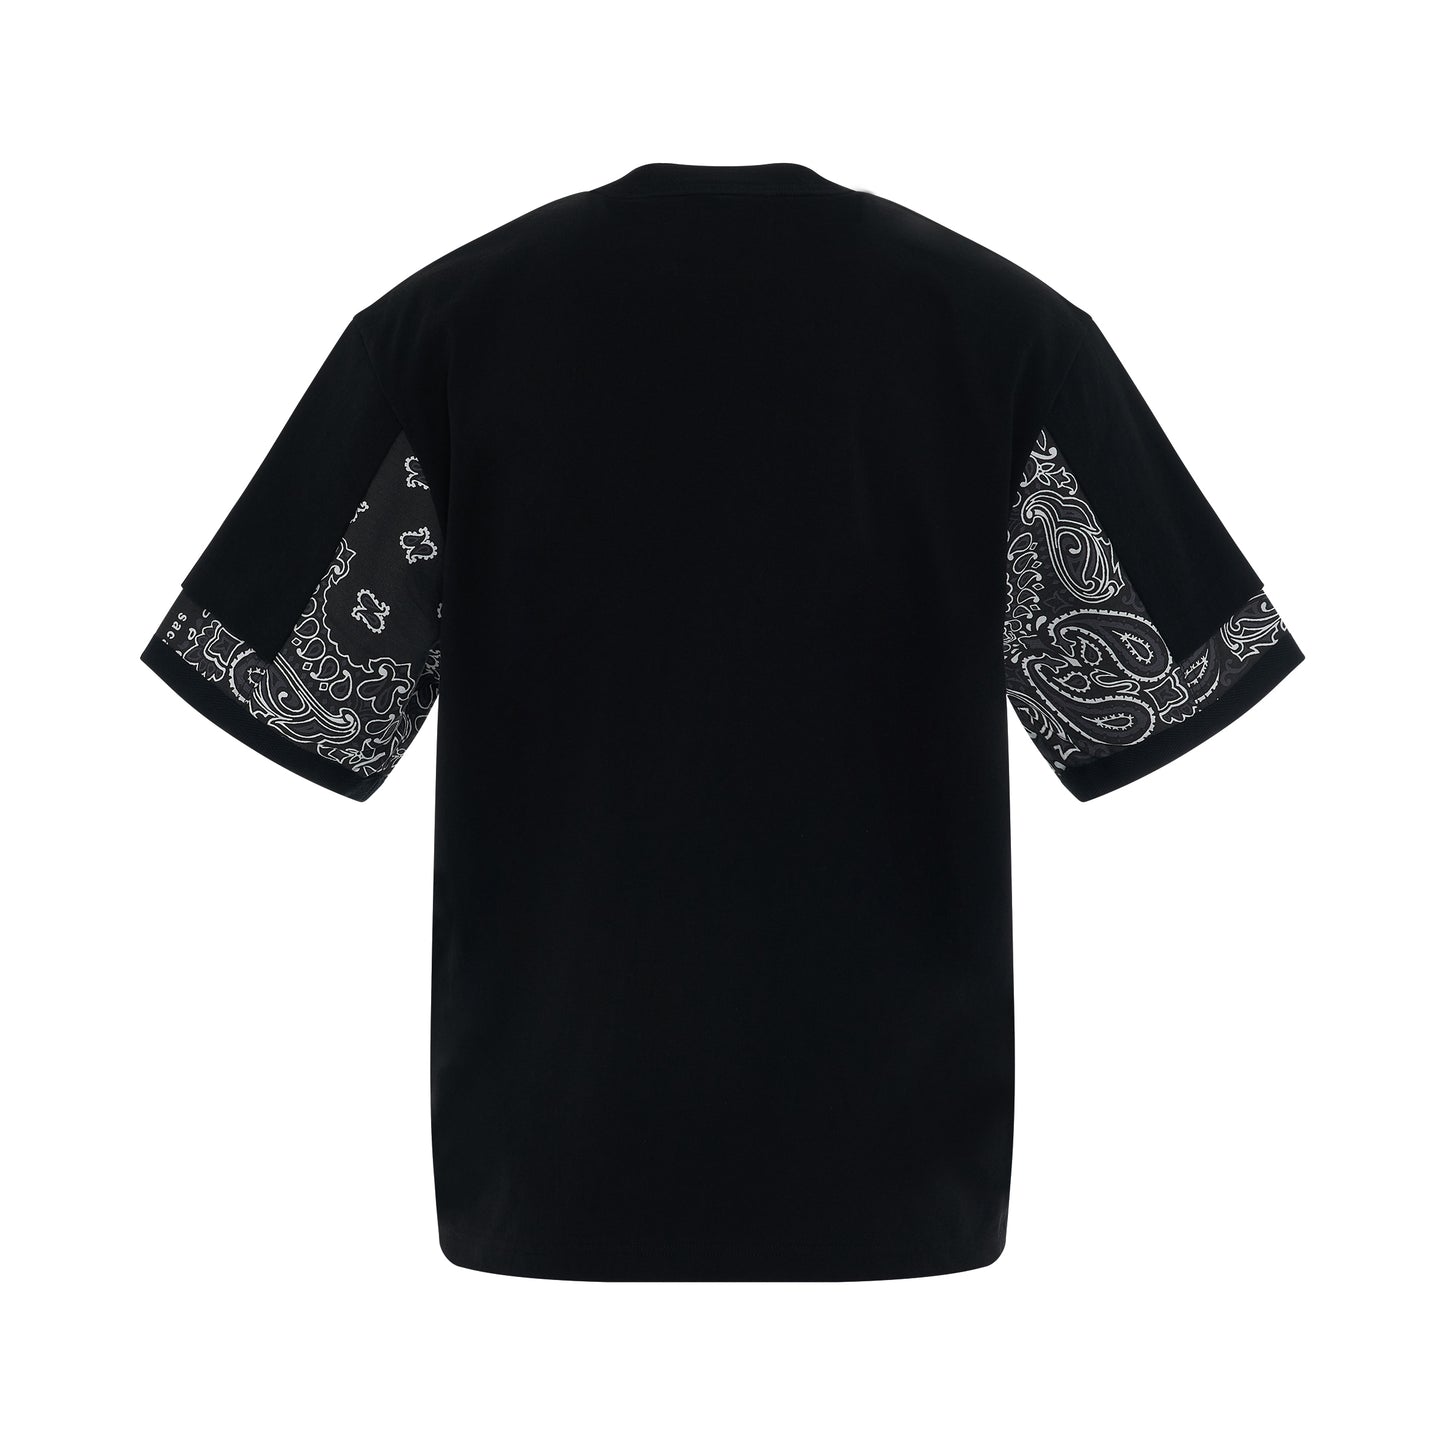 Bandana Print T-Shirt with Pocket in Black